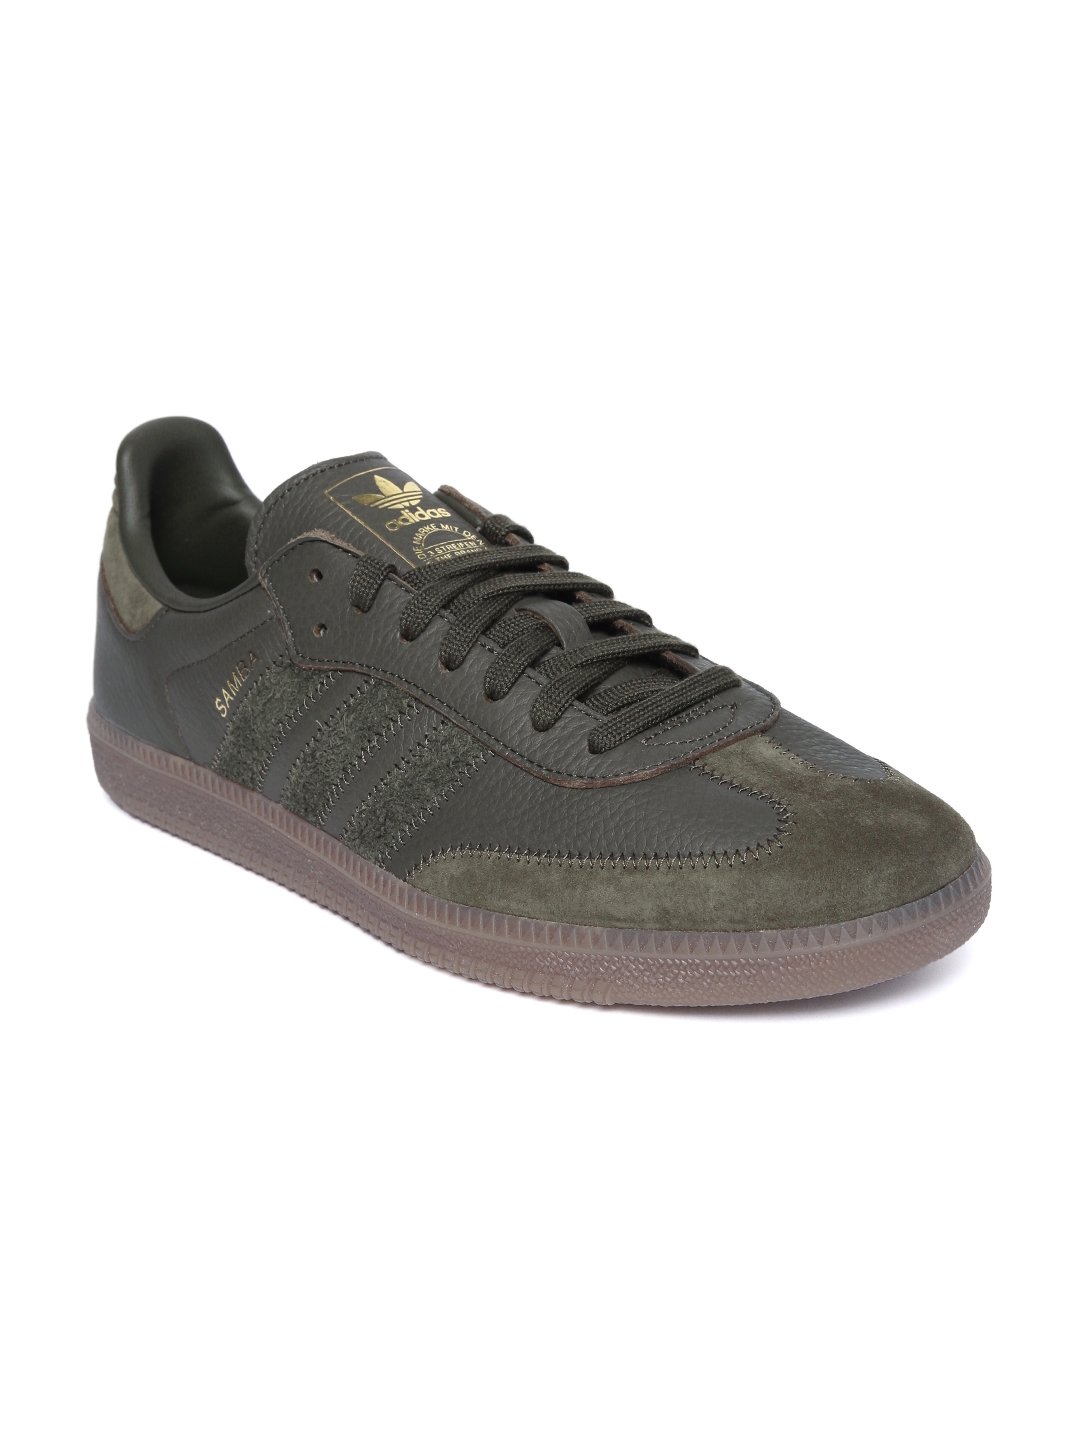 Buy ADIDAS Originals Men Olive Green SAMBA OG Sneakers Casual Shoes for Men 8616701 | Myntra